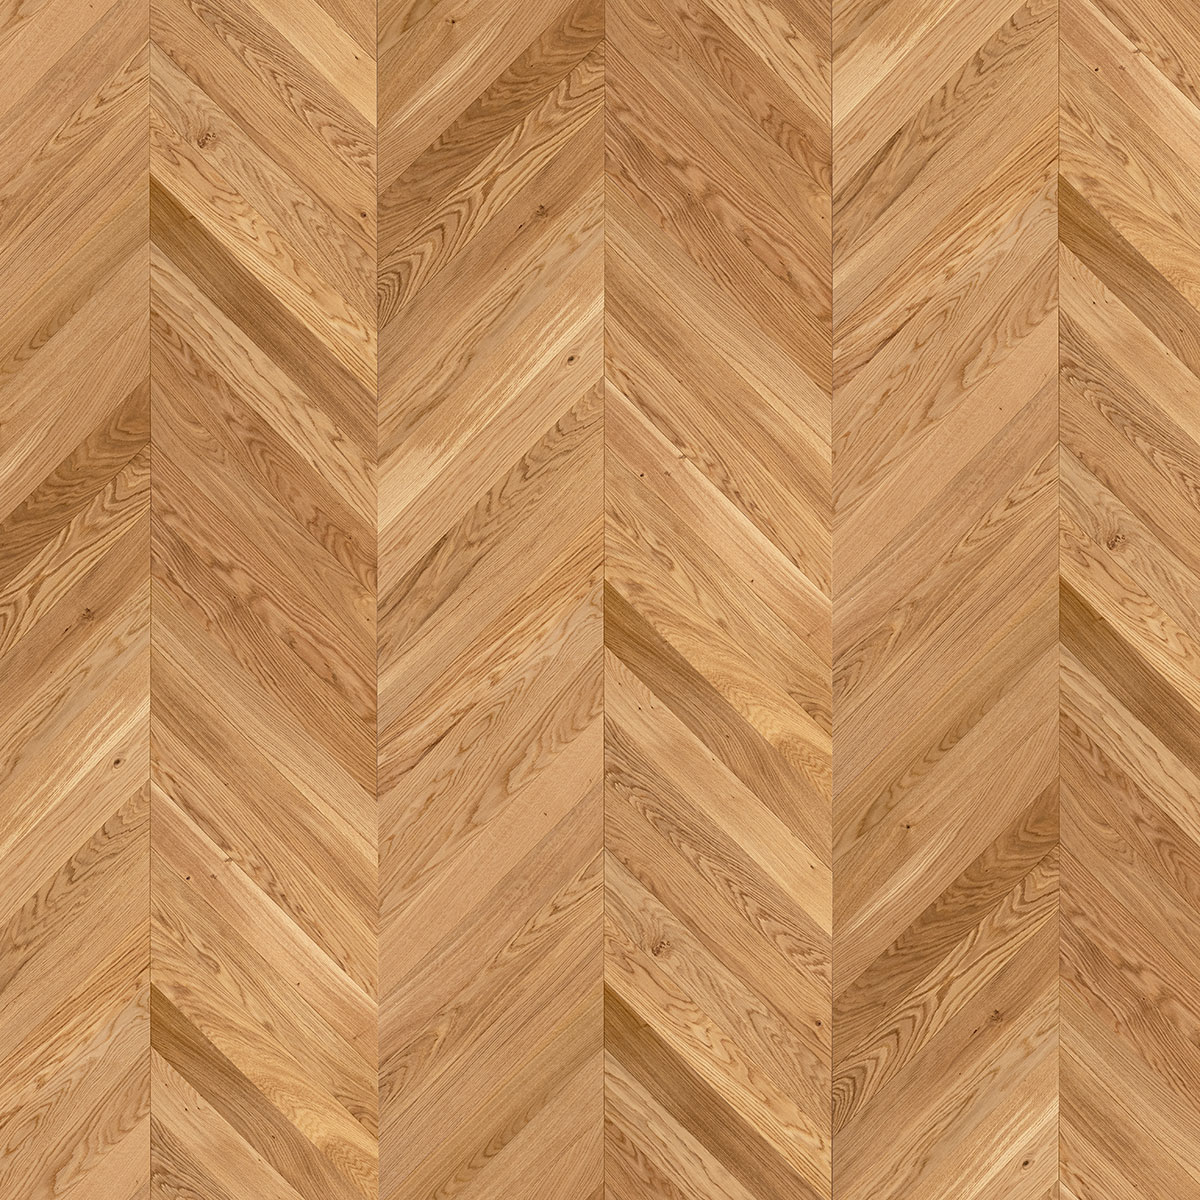 Engineered oak wood flooring named Genoa Natural